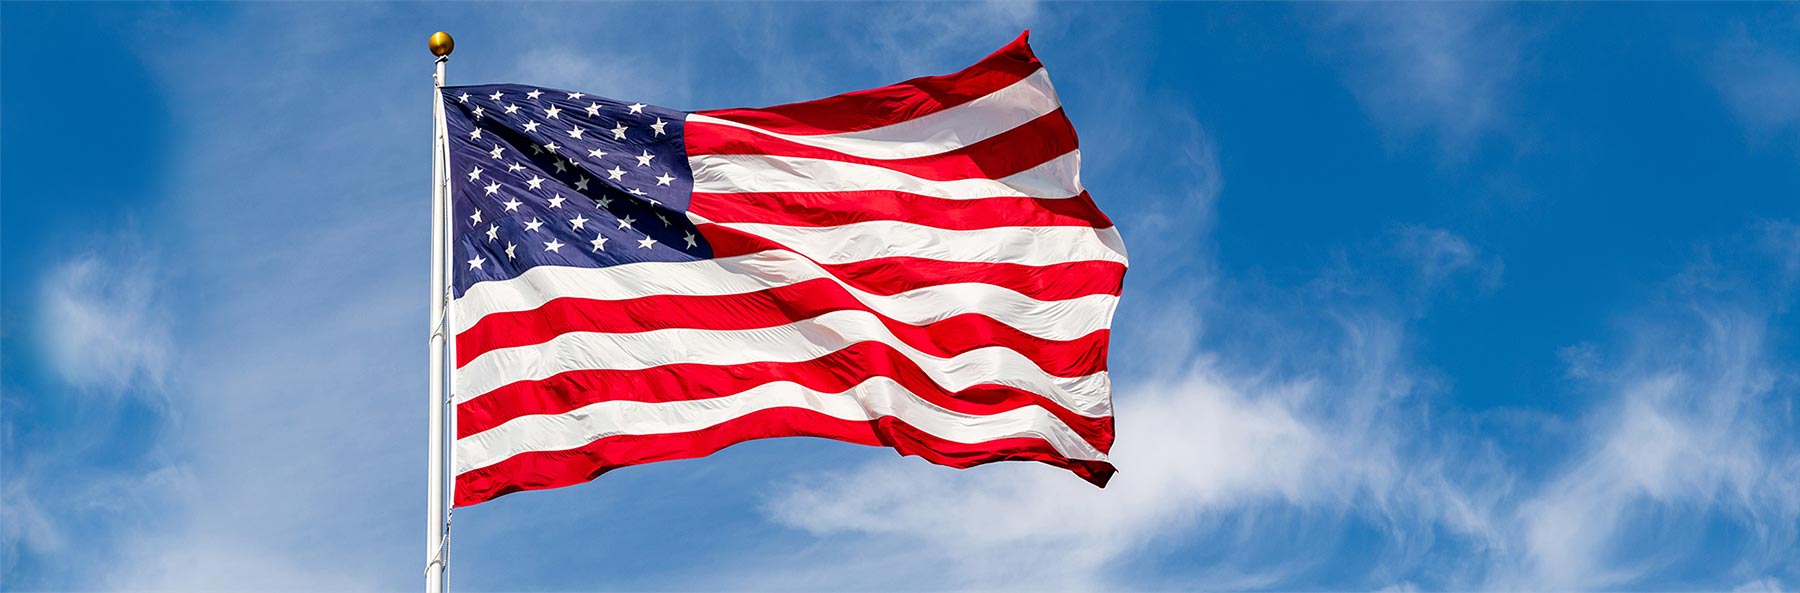 waving american flag blue sky